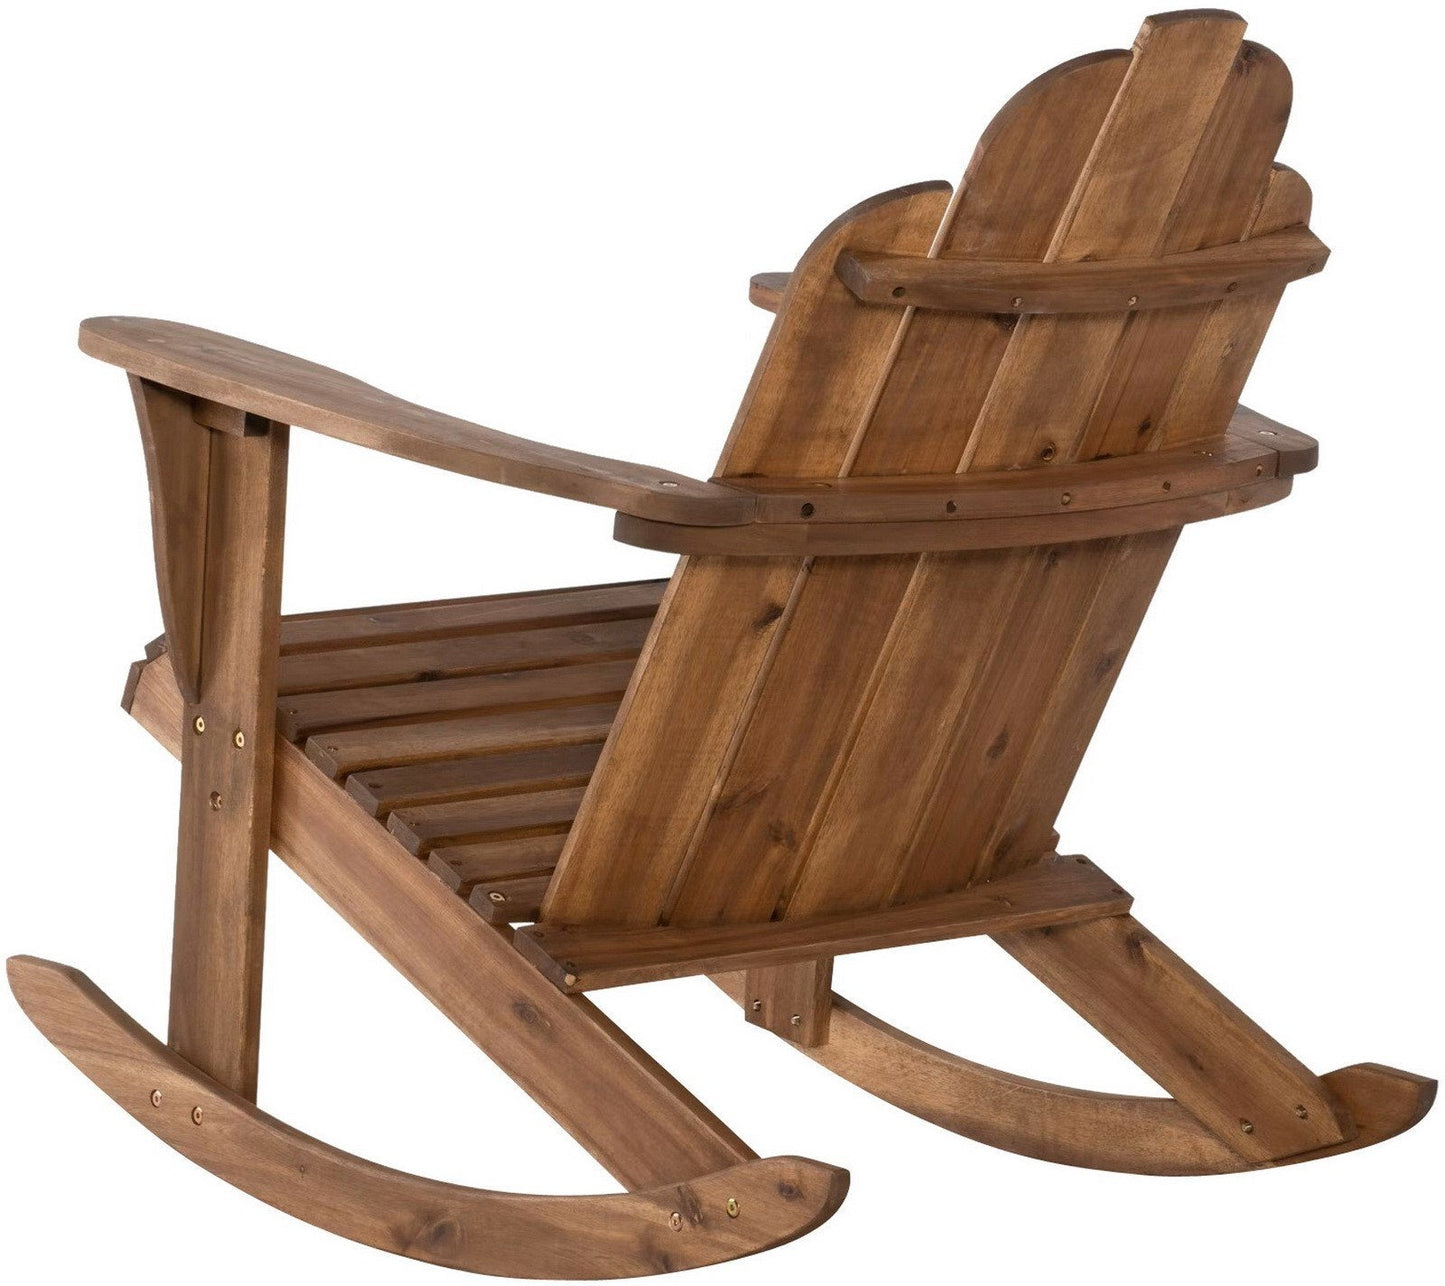 Teak Wood Porch Rocker Outdoor Rocking Chair Adirondack Patio Wooden Brown Big